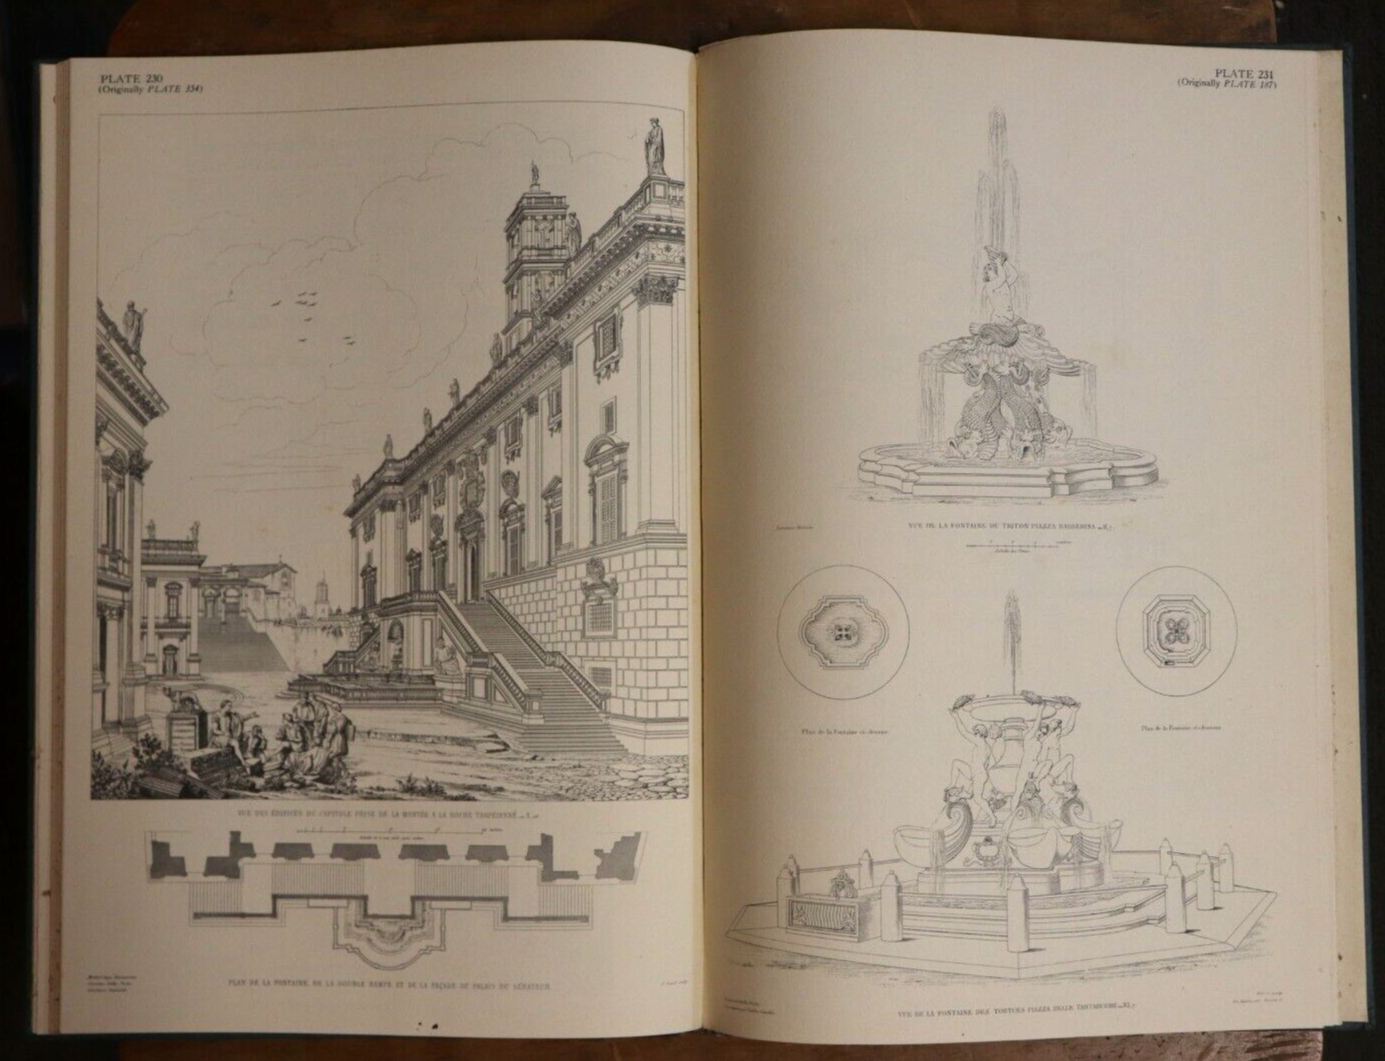 1928 4vol Edifices De Rome Moderne by Paul Letarouilly Architectural Books